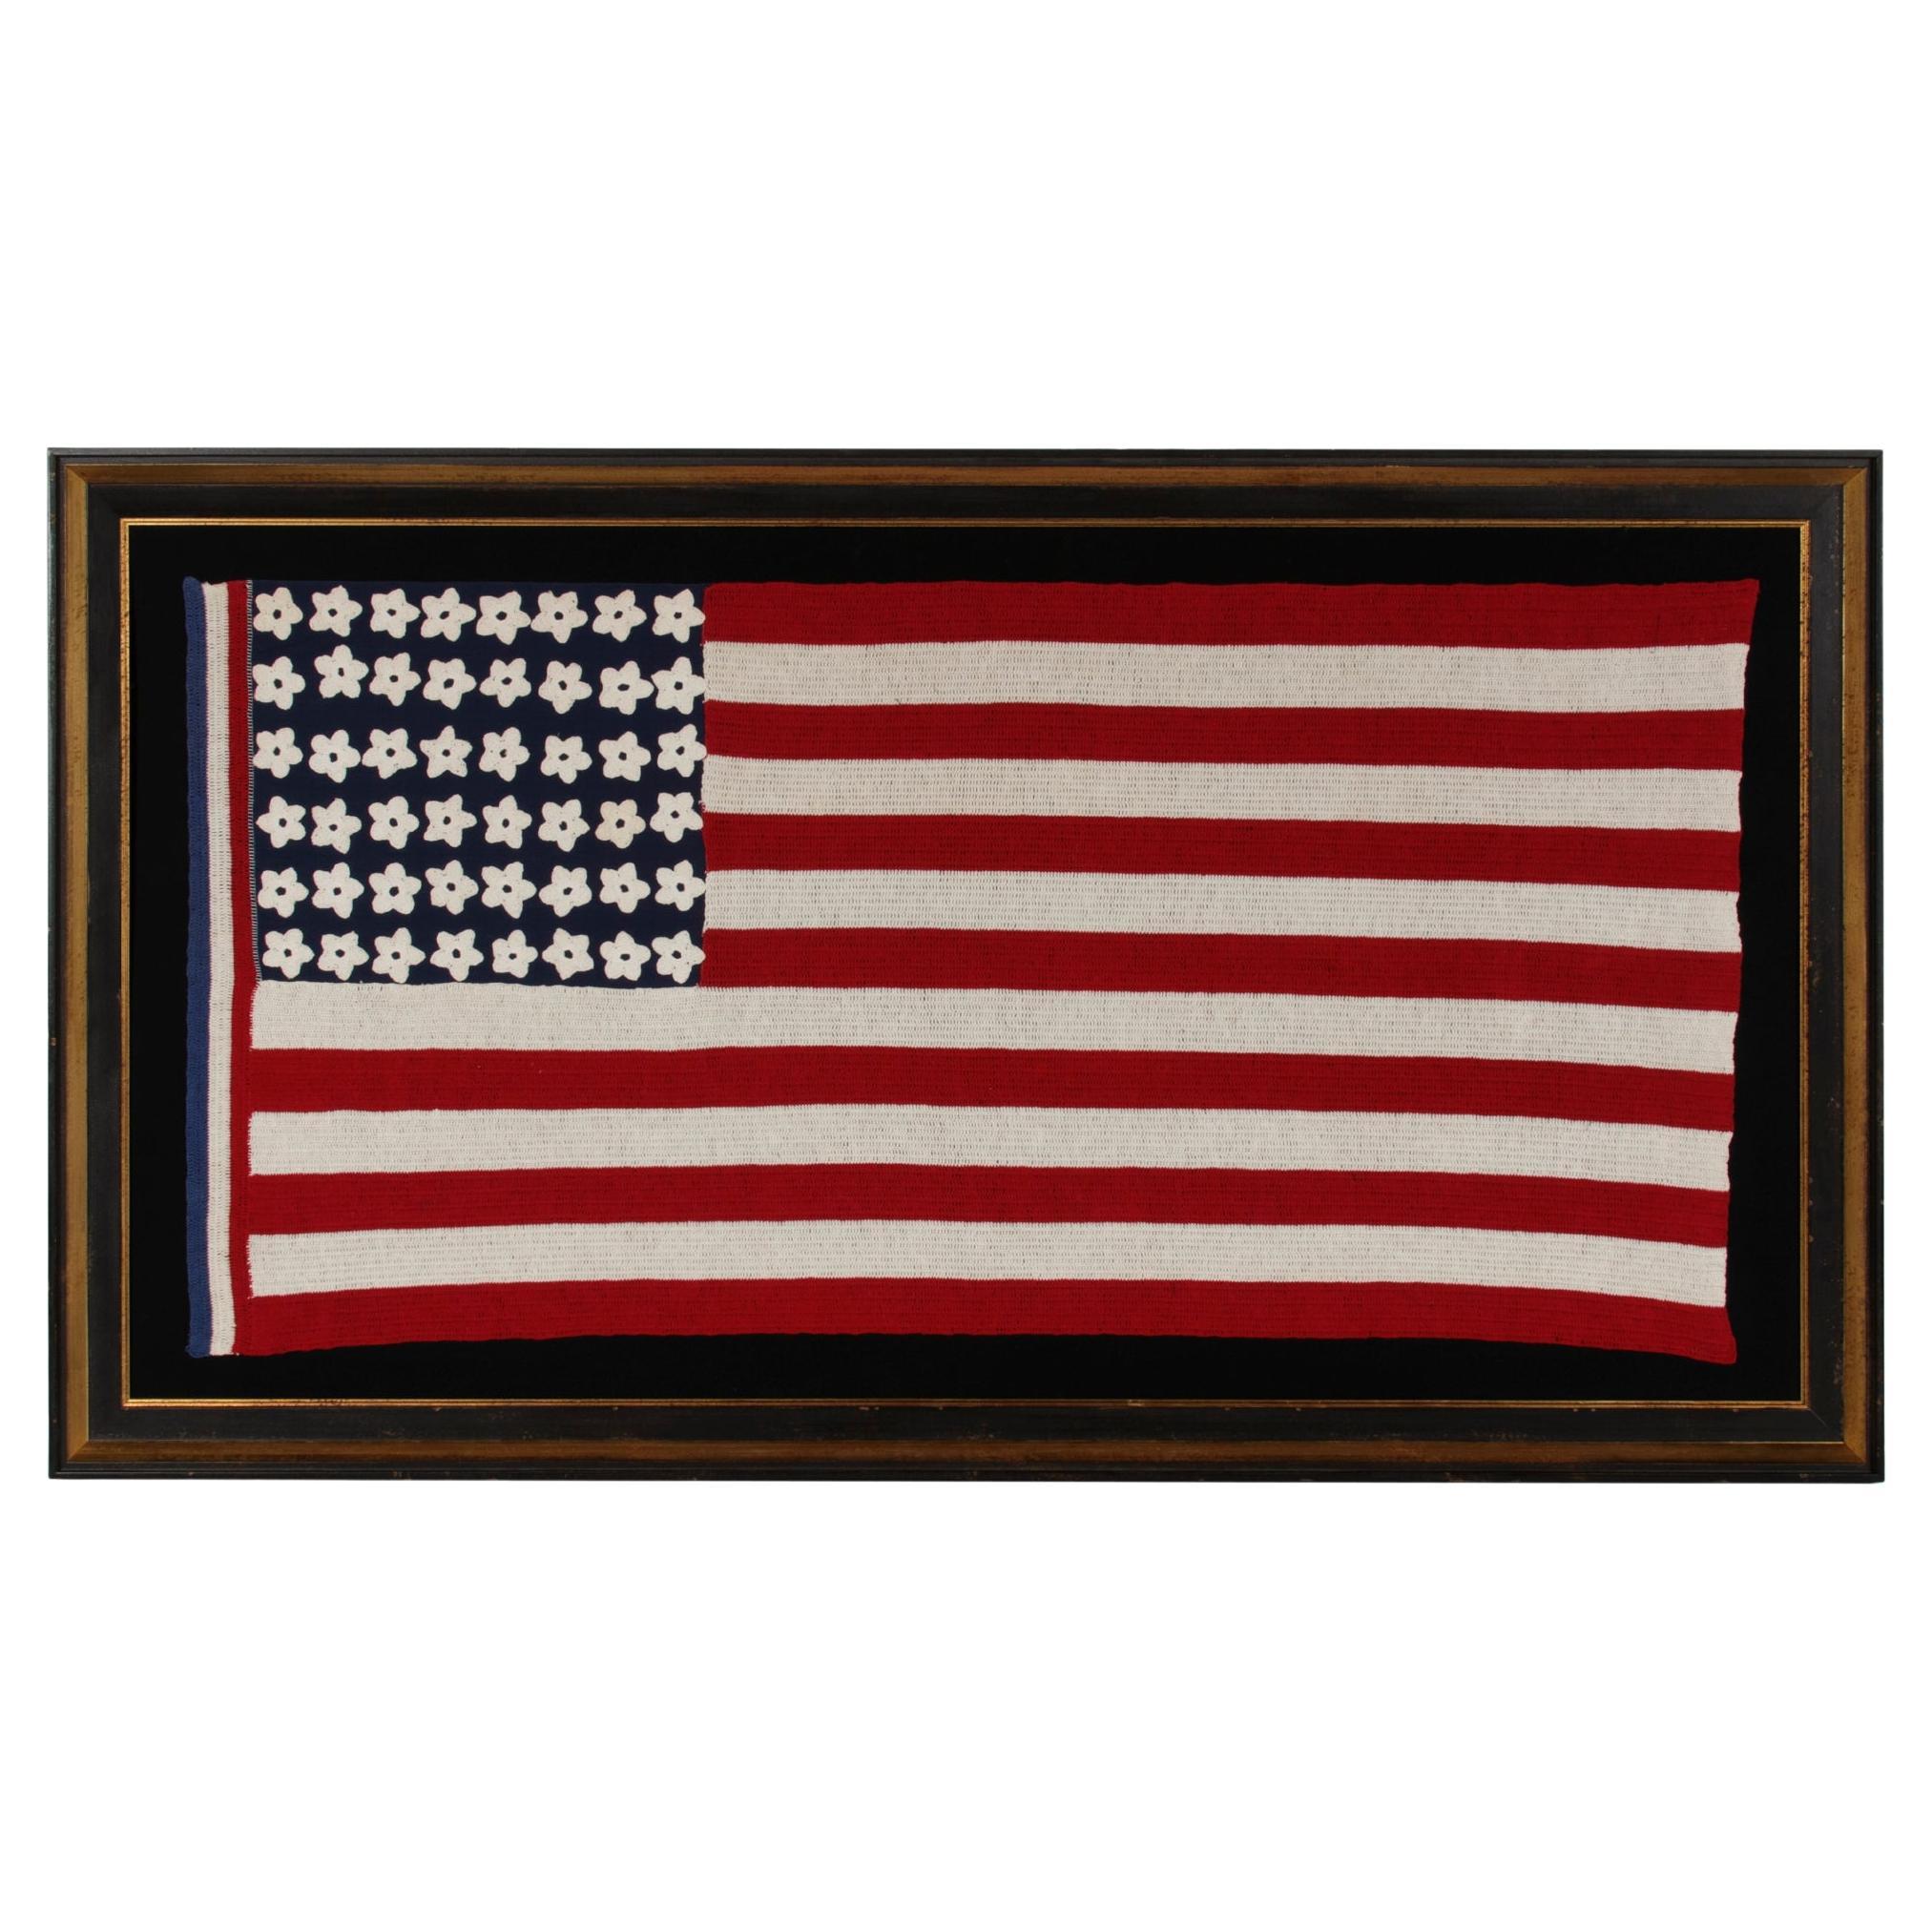 48 Star Crocheted Homemade American Flag, WWII Era, 1941-1945 For Sale